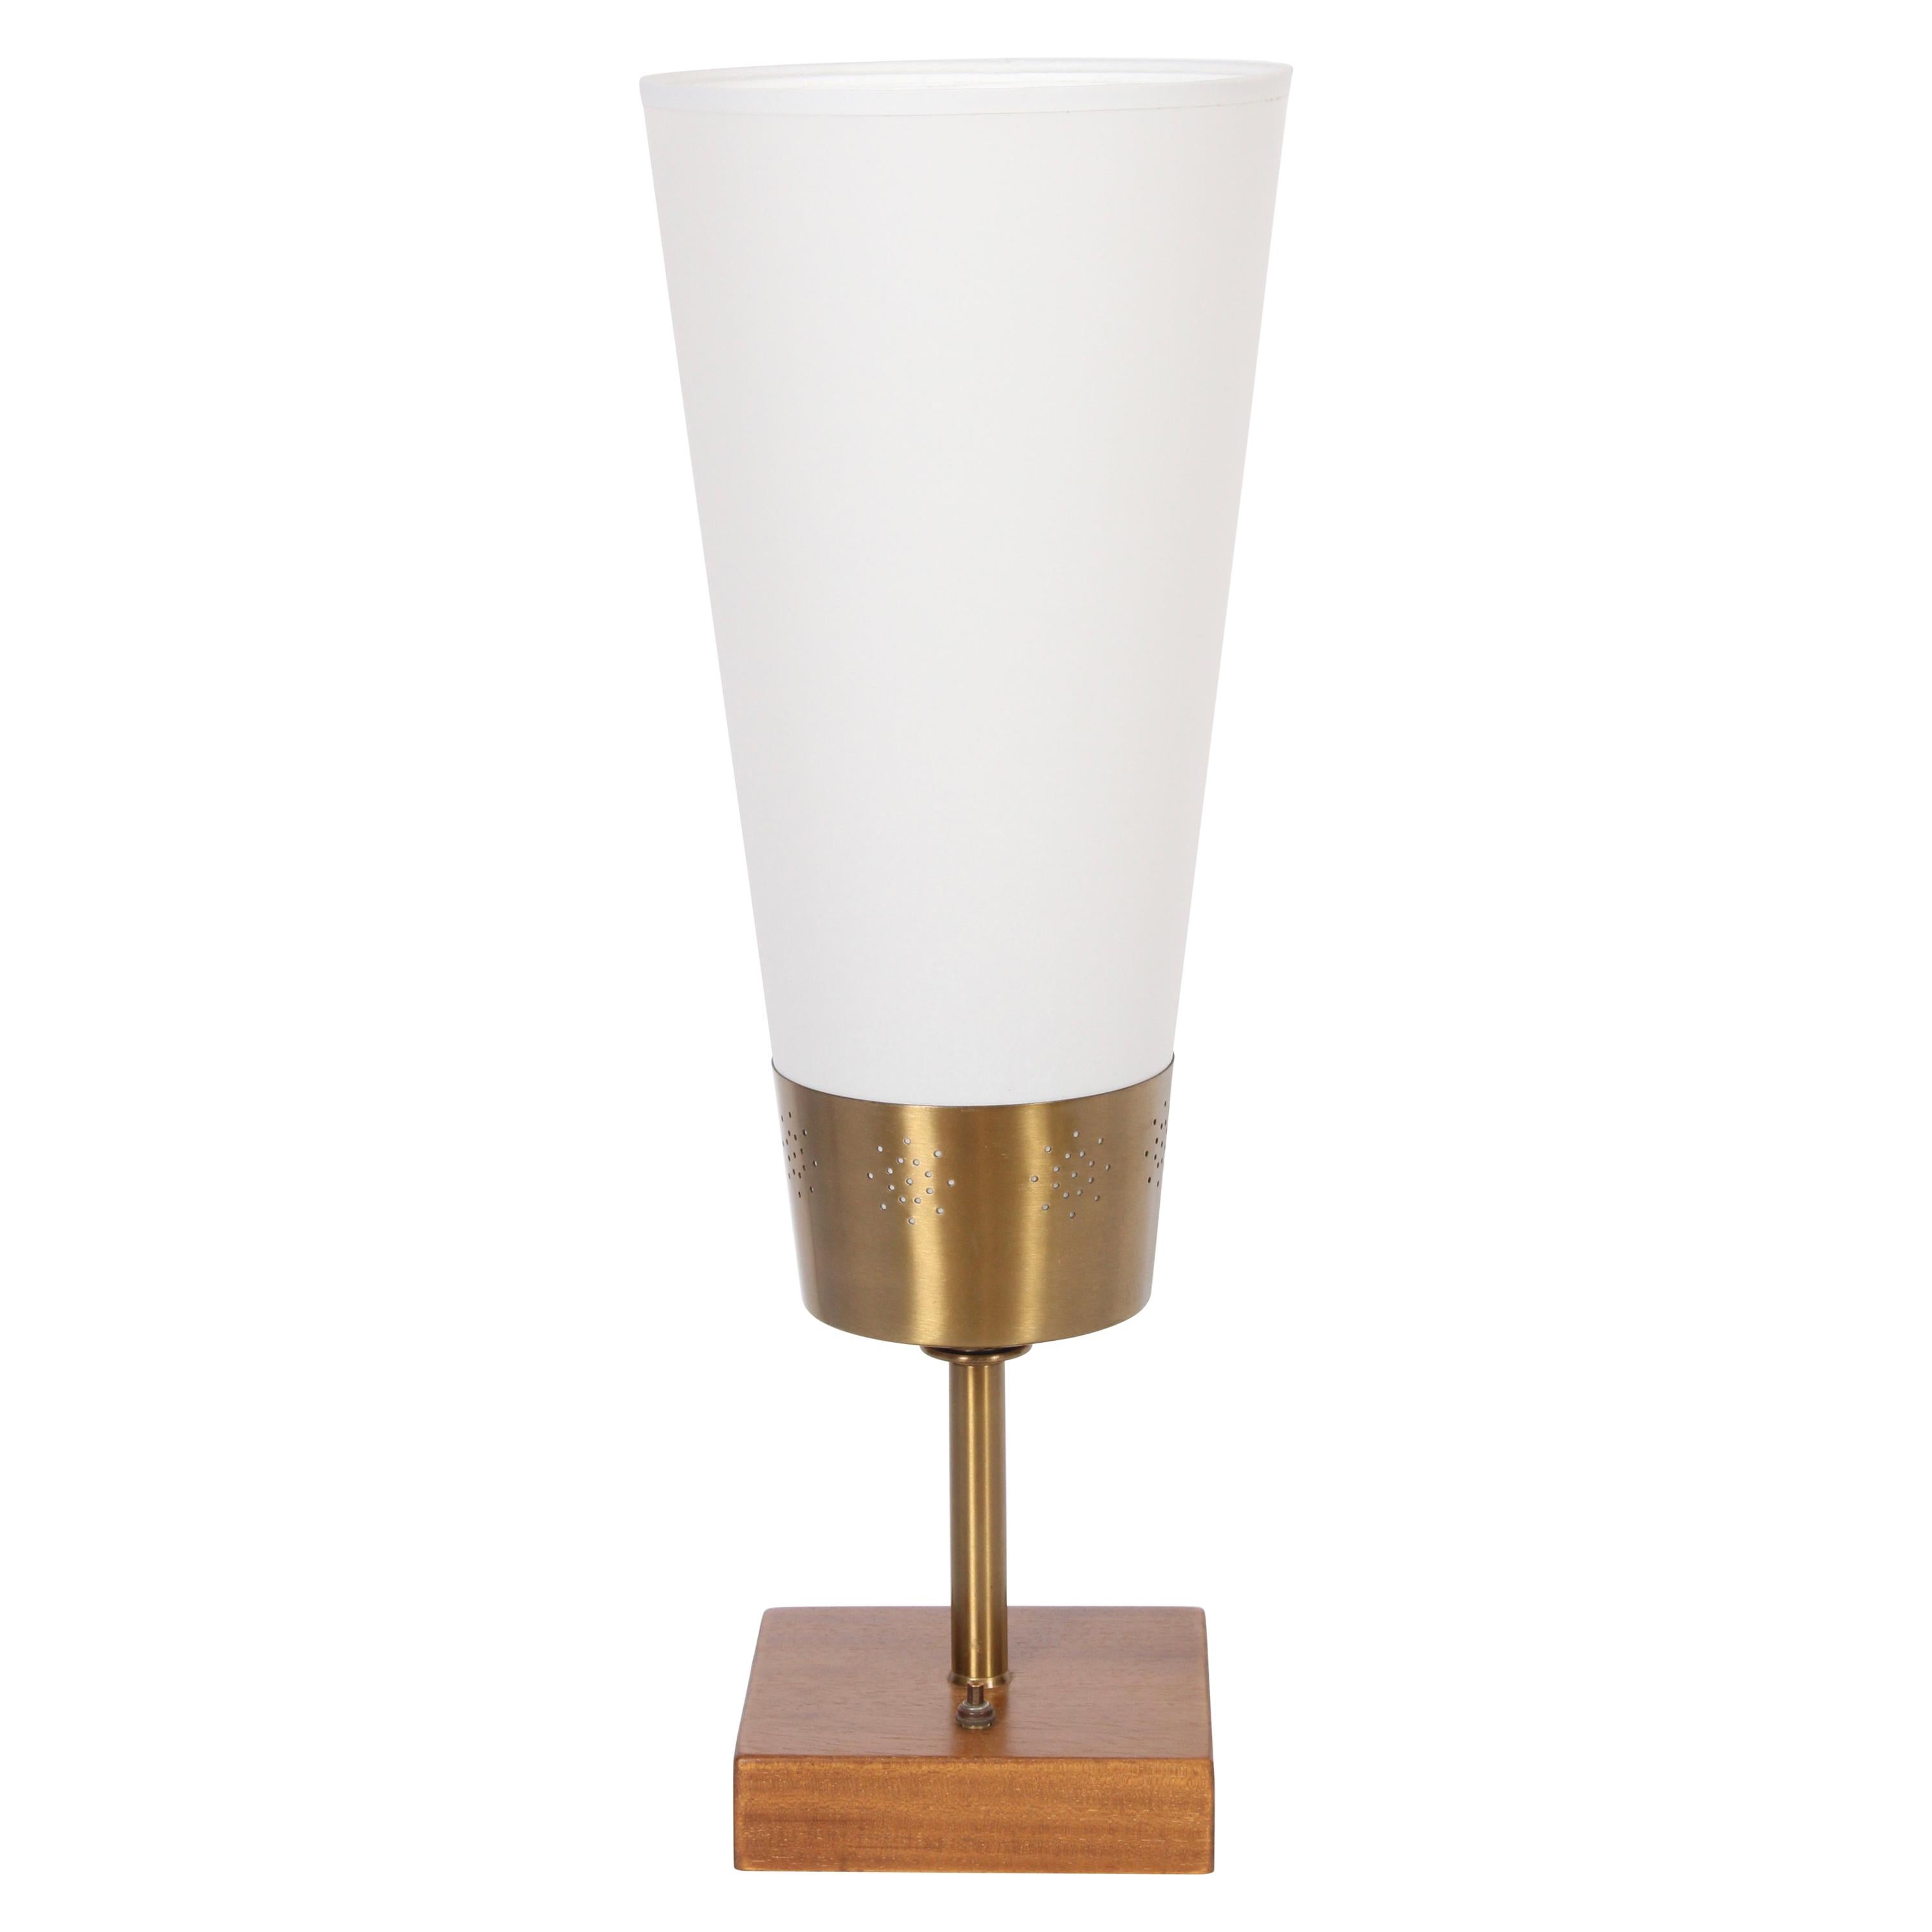 Yasha Heifetz Pierced Brass and Mahogany Table Lamp with White Cone Shade, 1940s